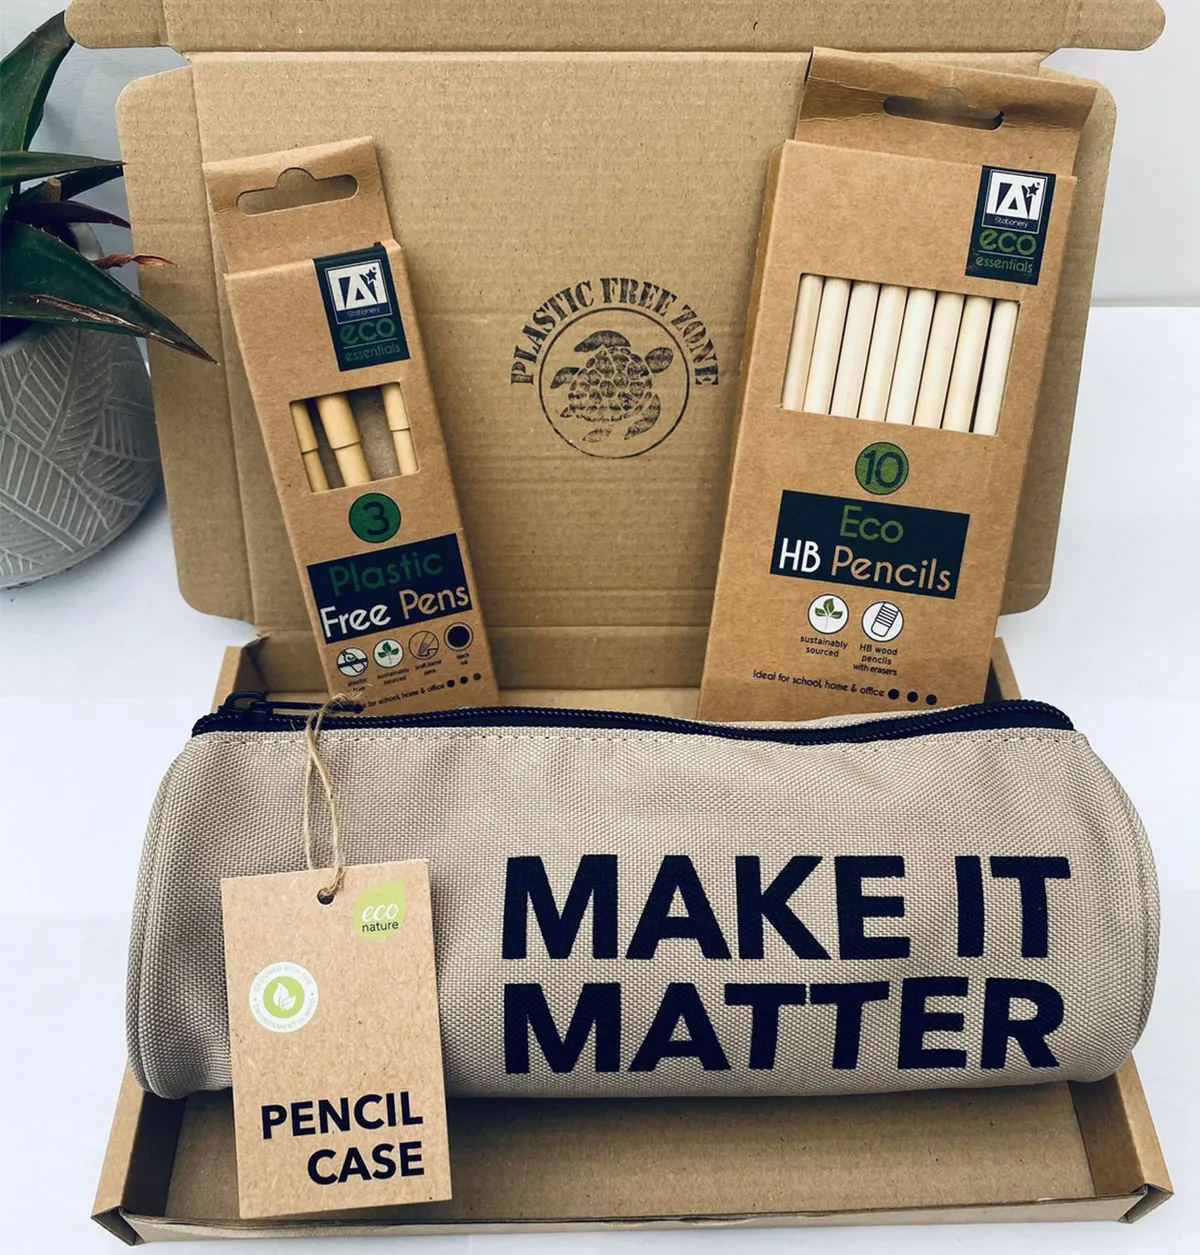 Mr. Pen - Pencil Box, 2 Pack, Assorted Color, Pencil Case for Kids, Pencil Box for Kids, Plastic Pencil Box, Hard Pencil Case, School Supply Box